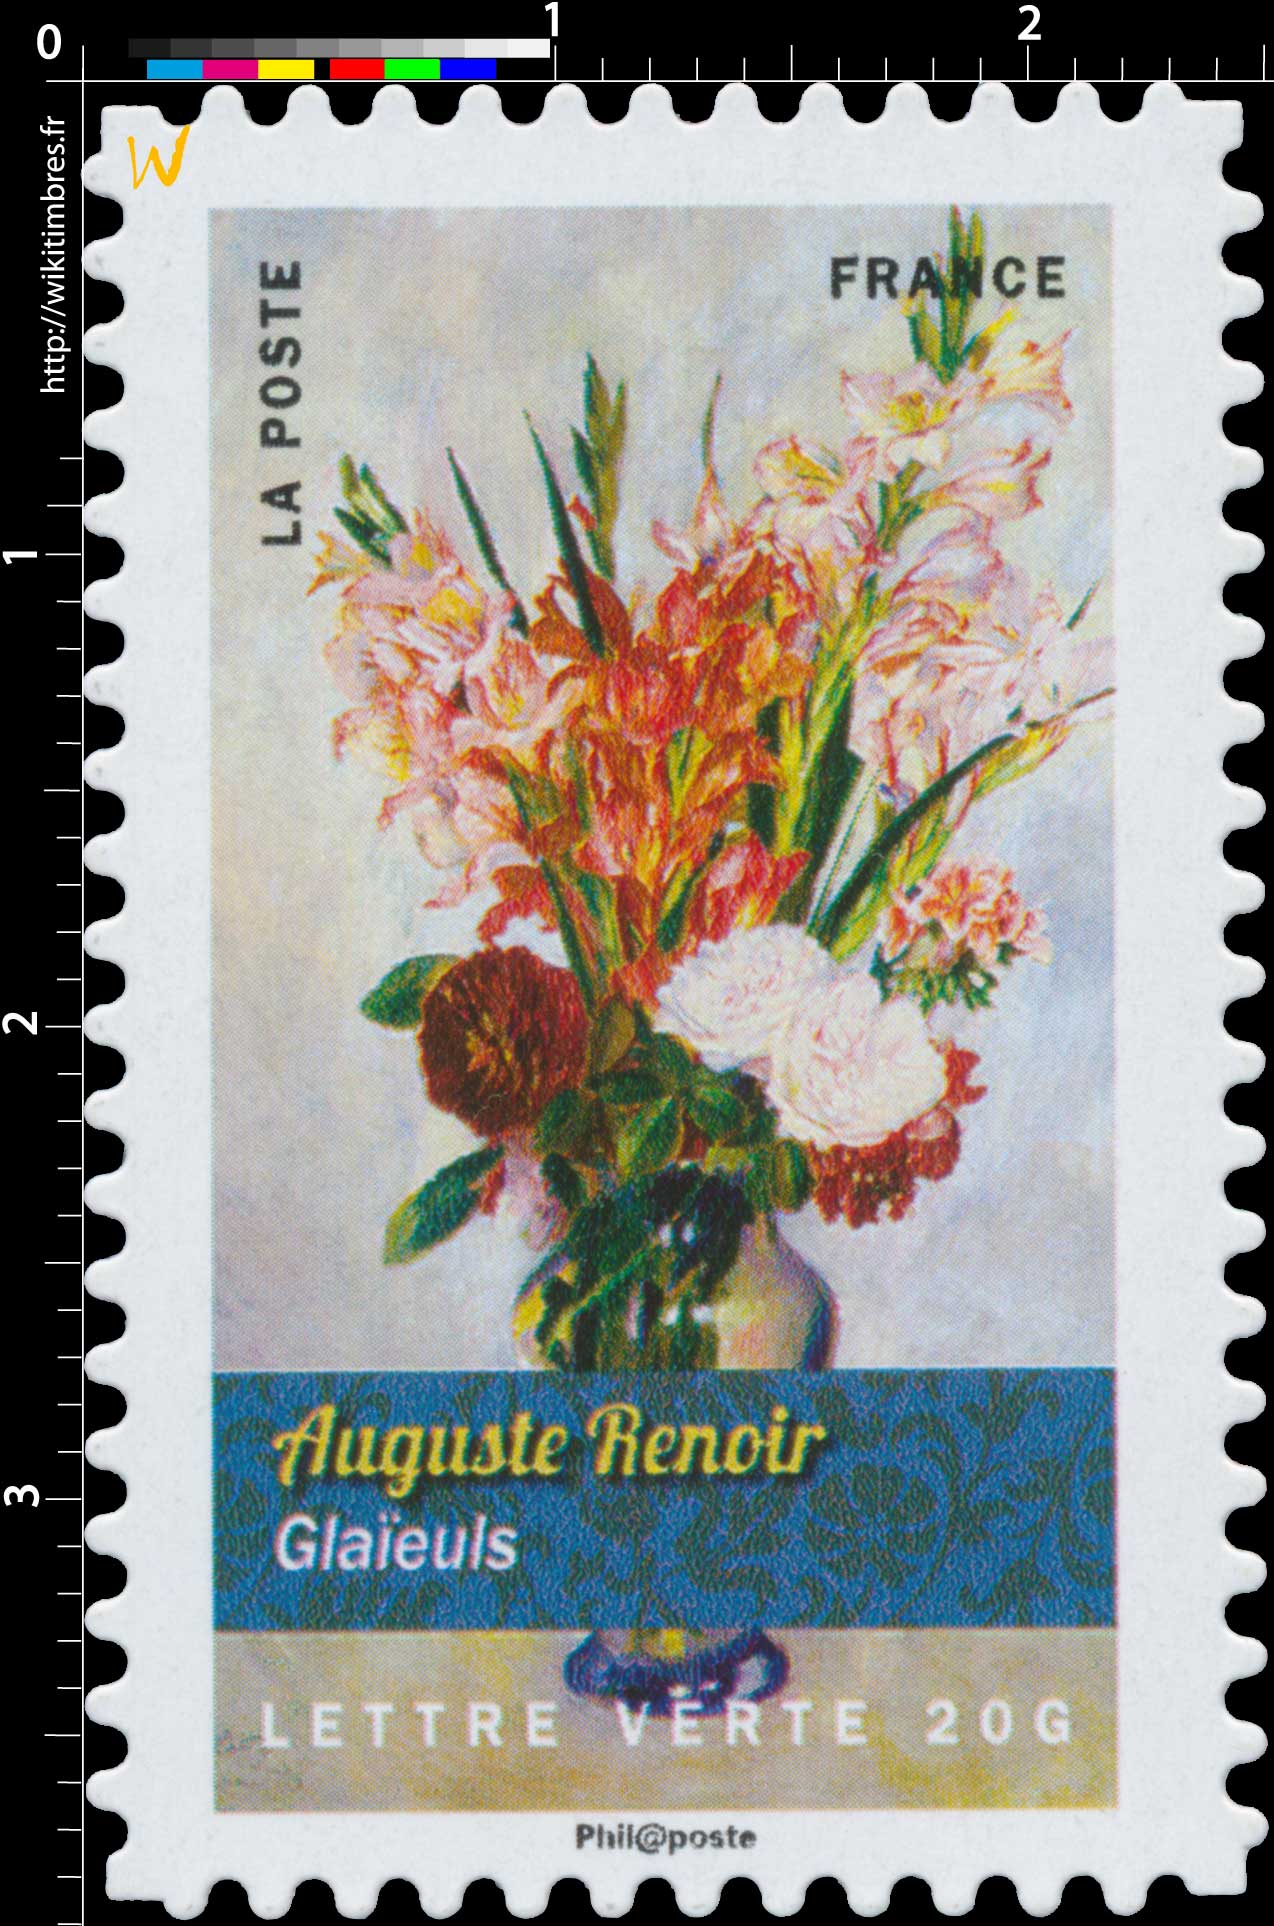 2015 Auguste Renoir - Glaïeuls